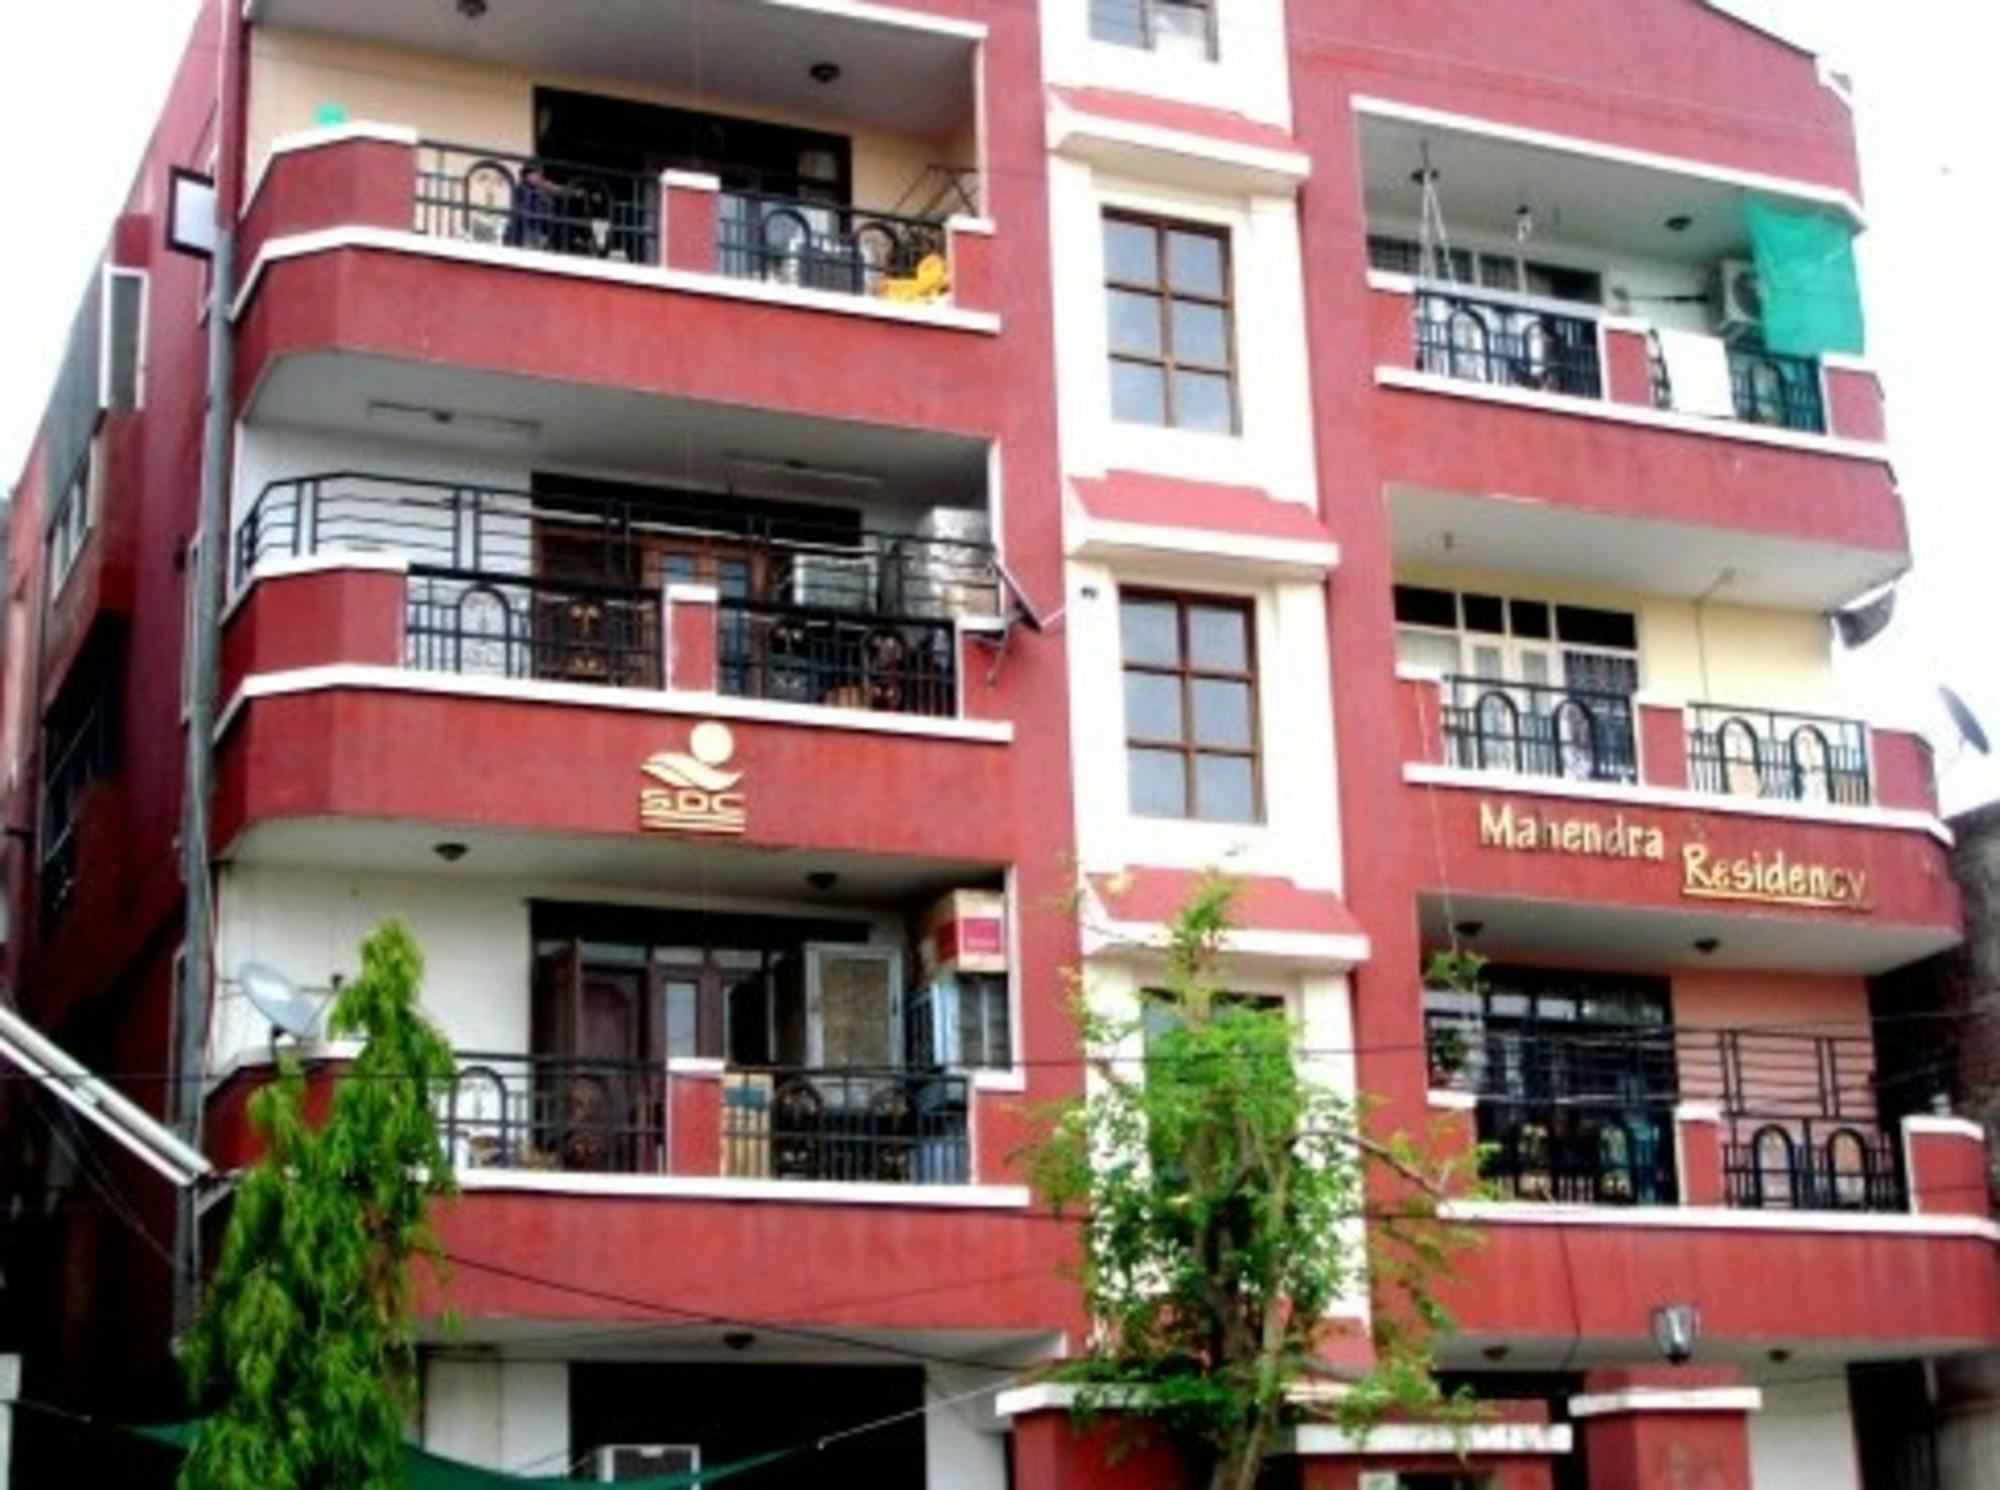 SDC Mahendra Residency